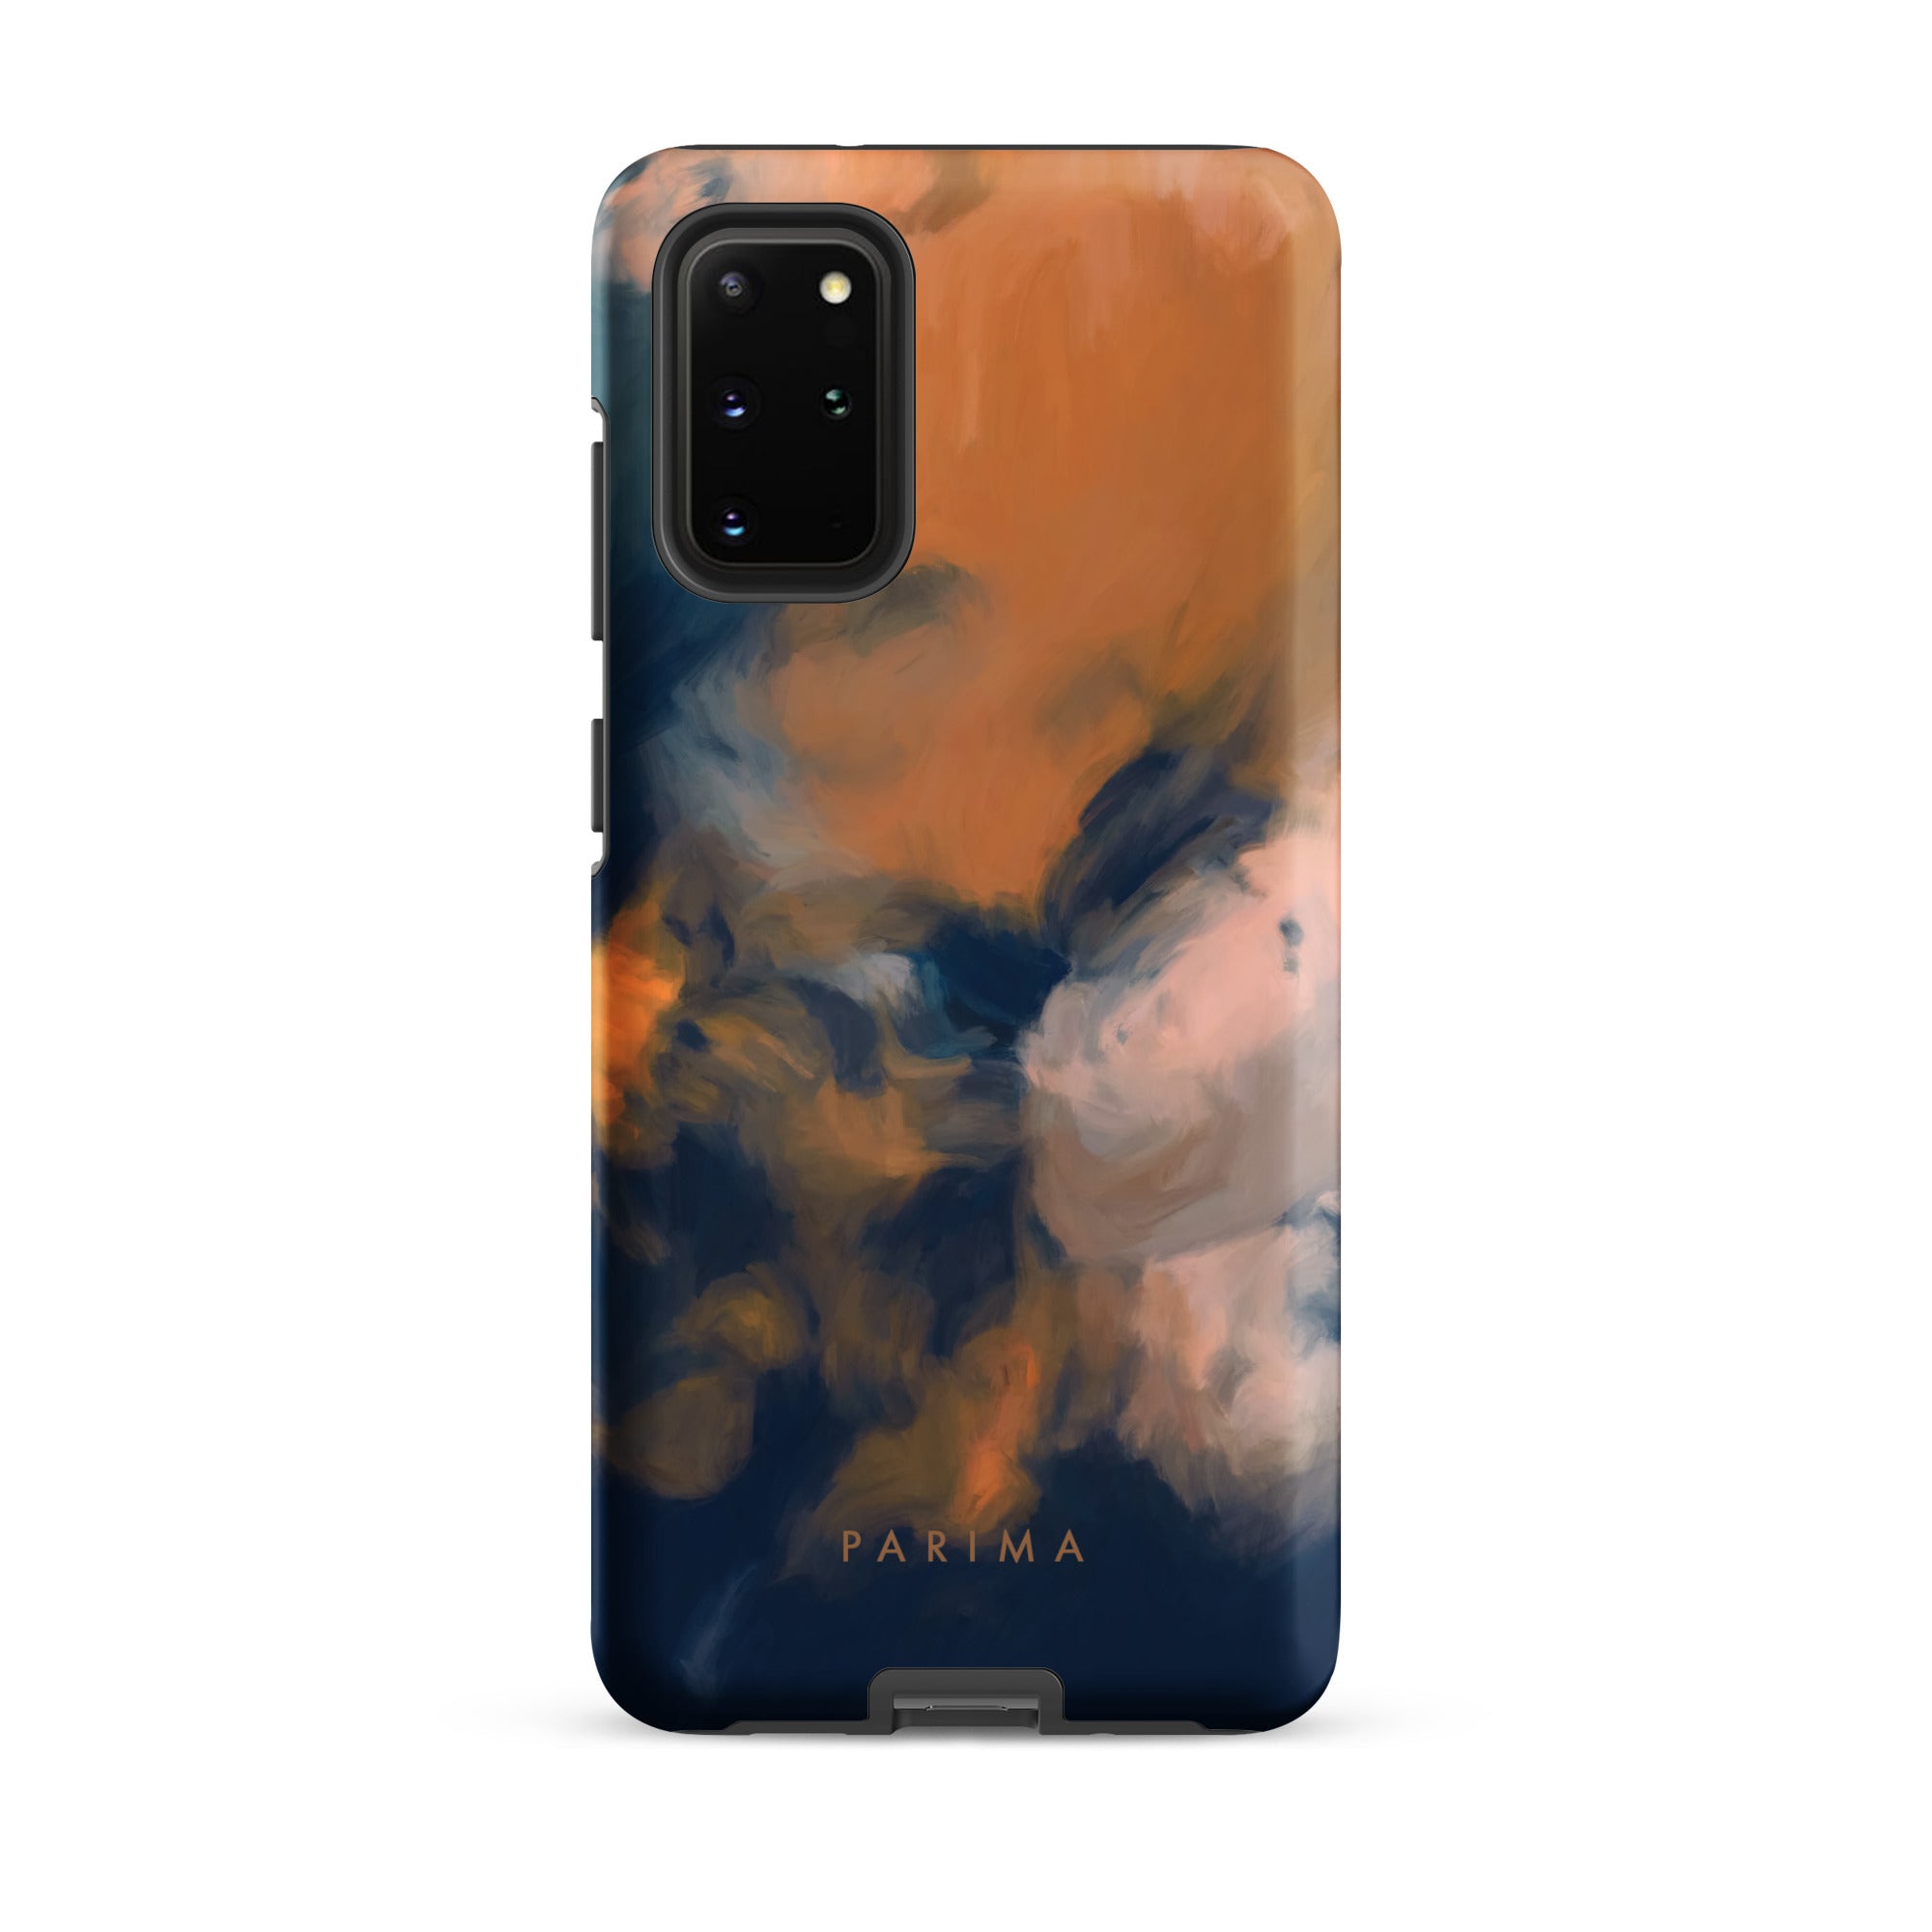 Mia Luna, blue and orange abstract art on Samsung Galaxy S20 plus tough case by Parima Studio